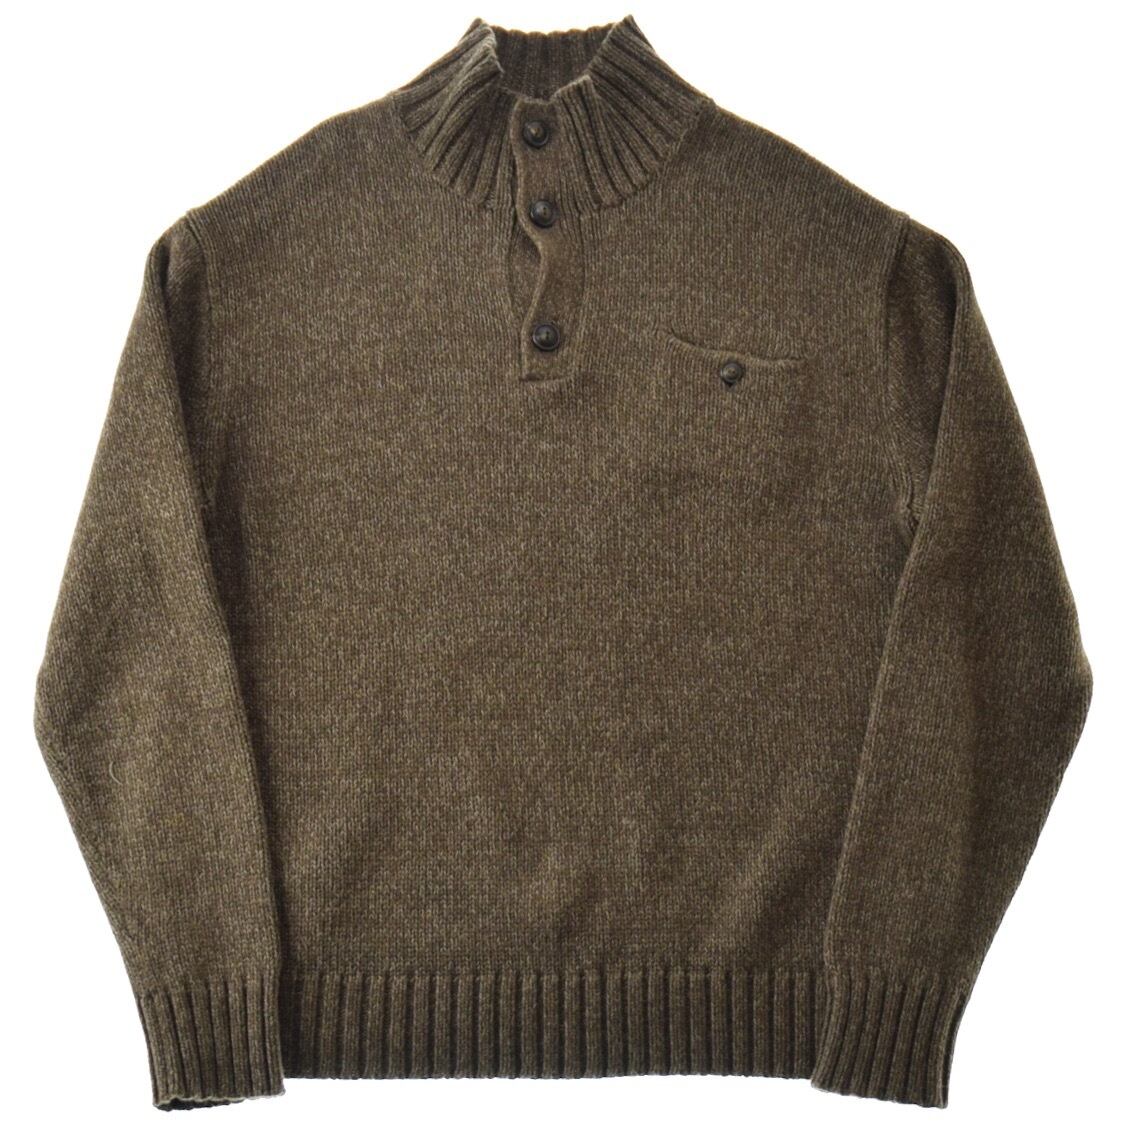 Vintage polo knit